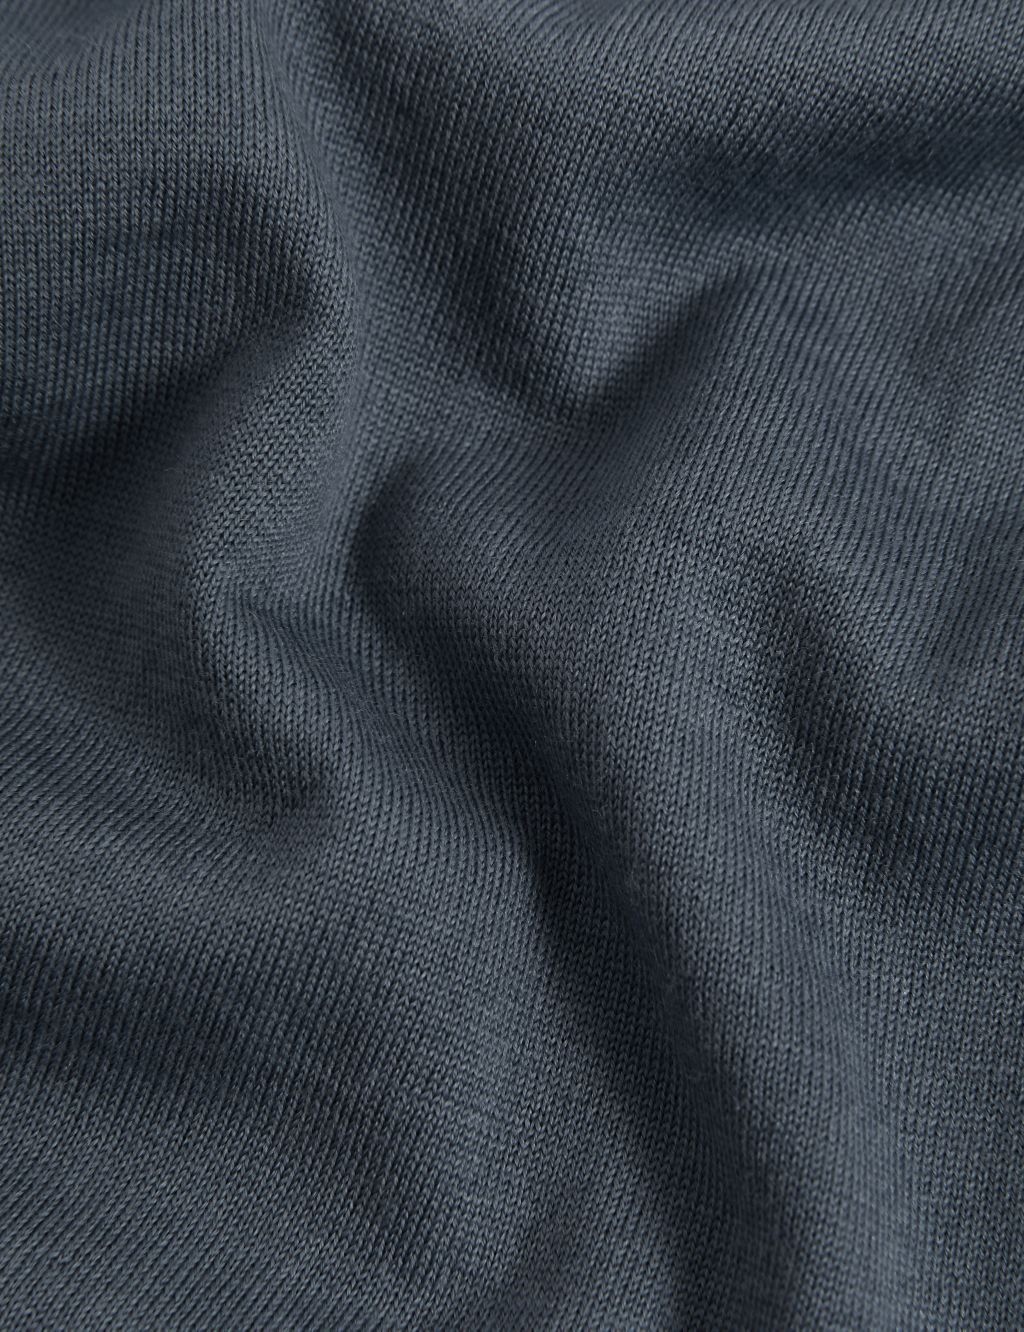 Pure Extra Fine Merino Wool Jumper image 6